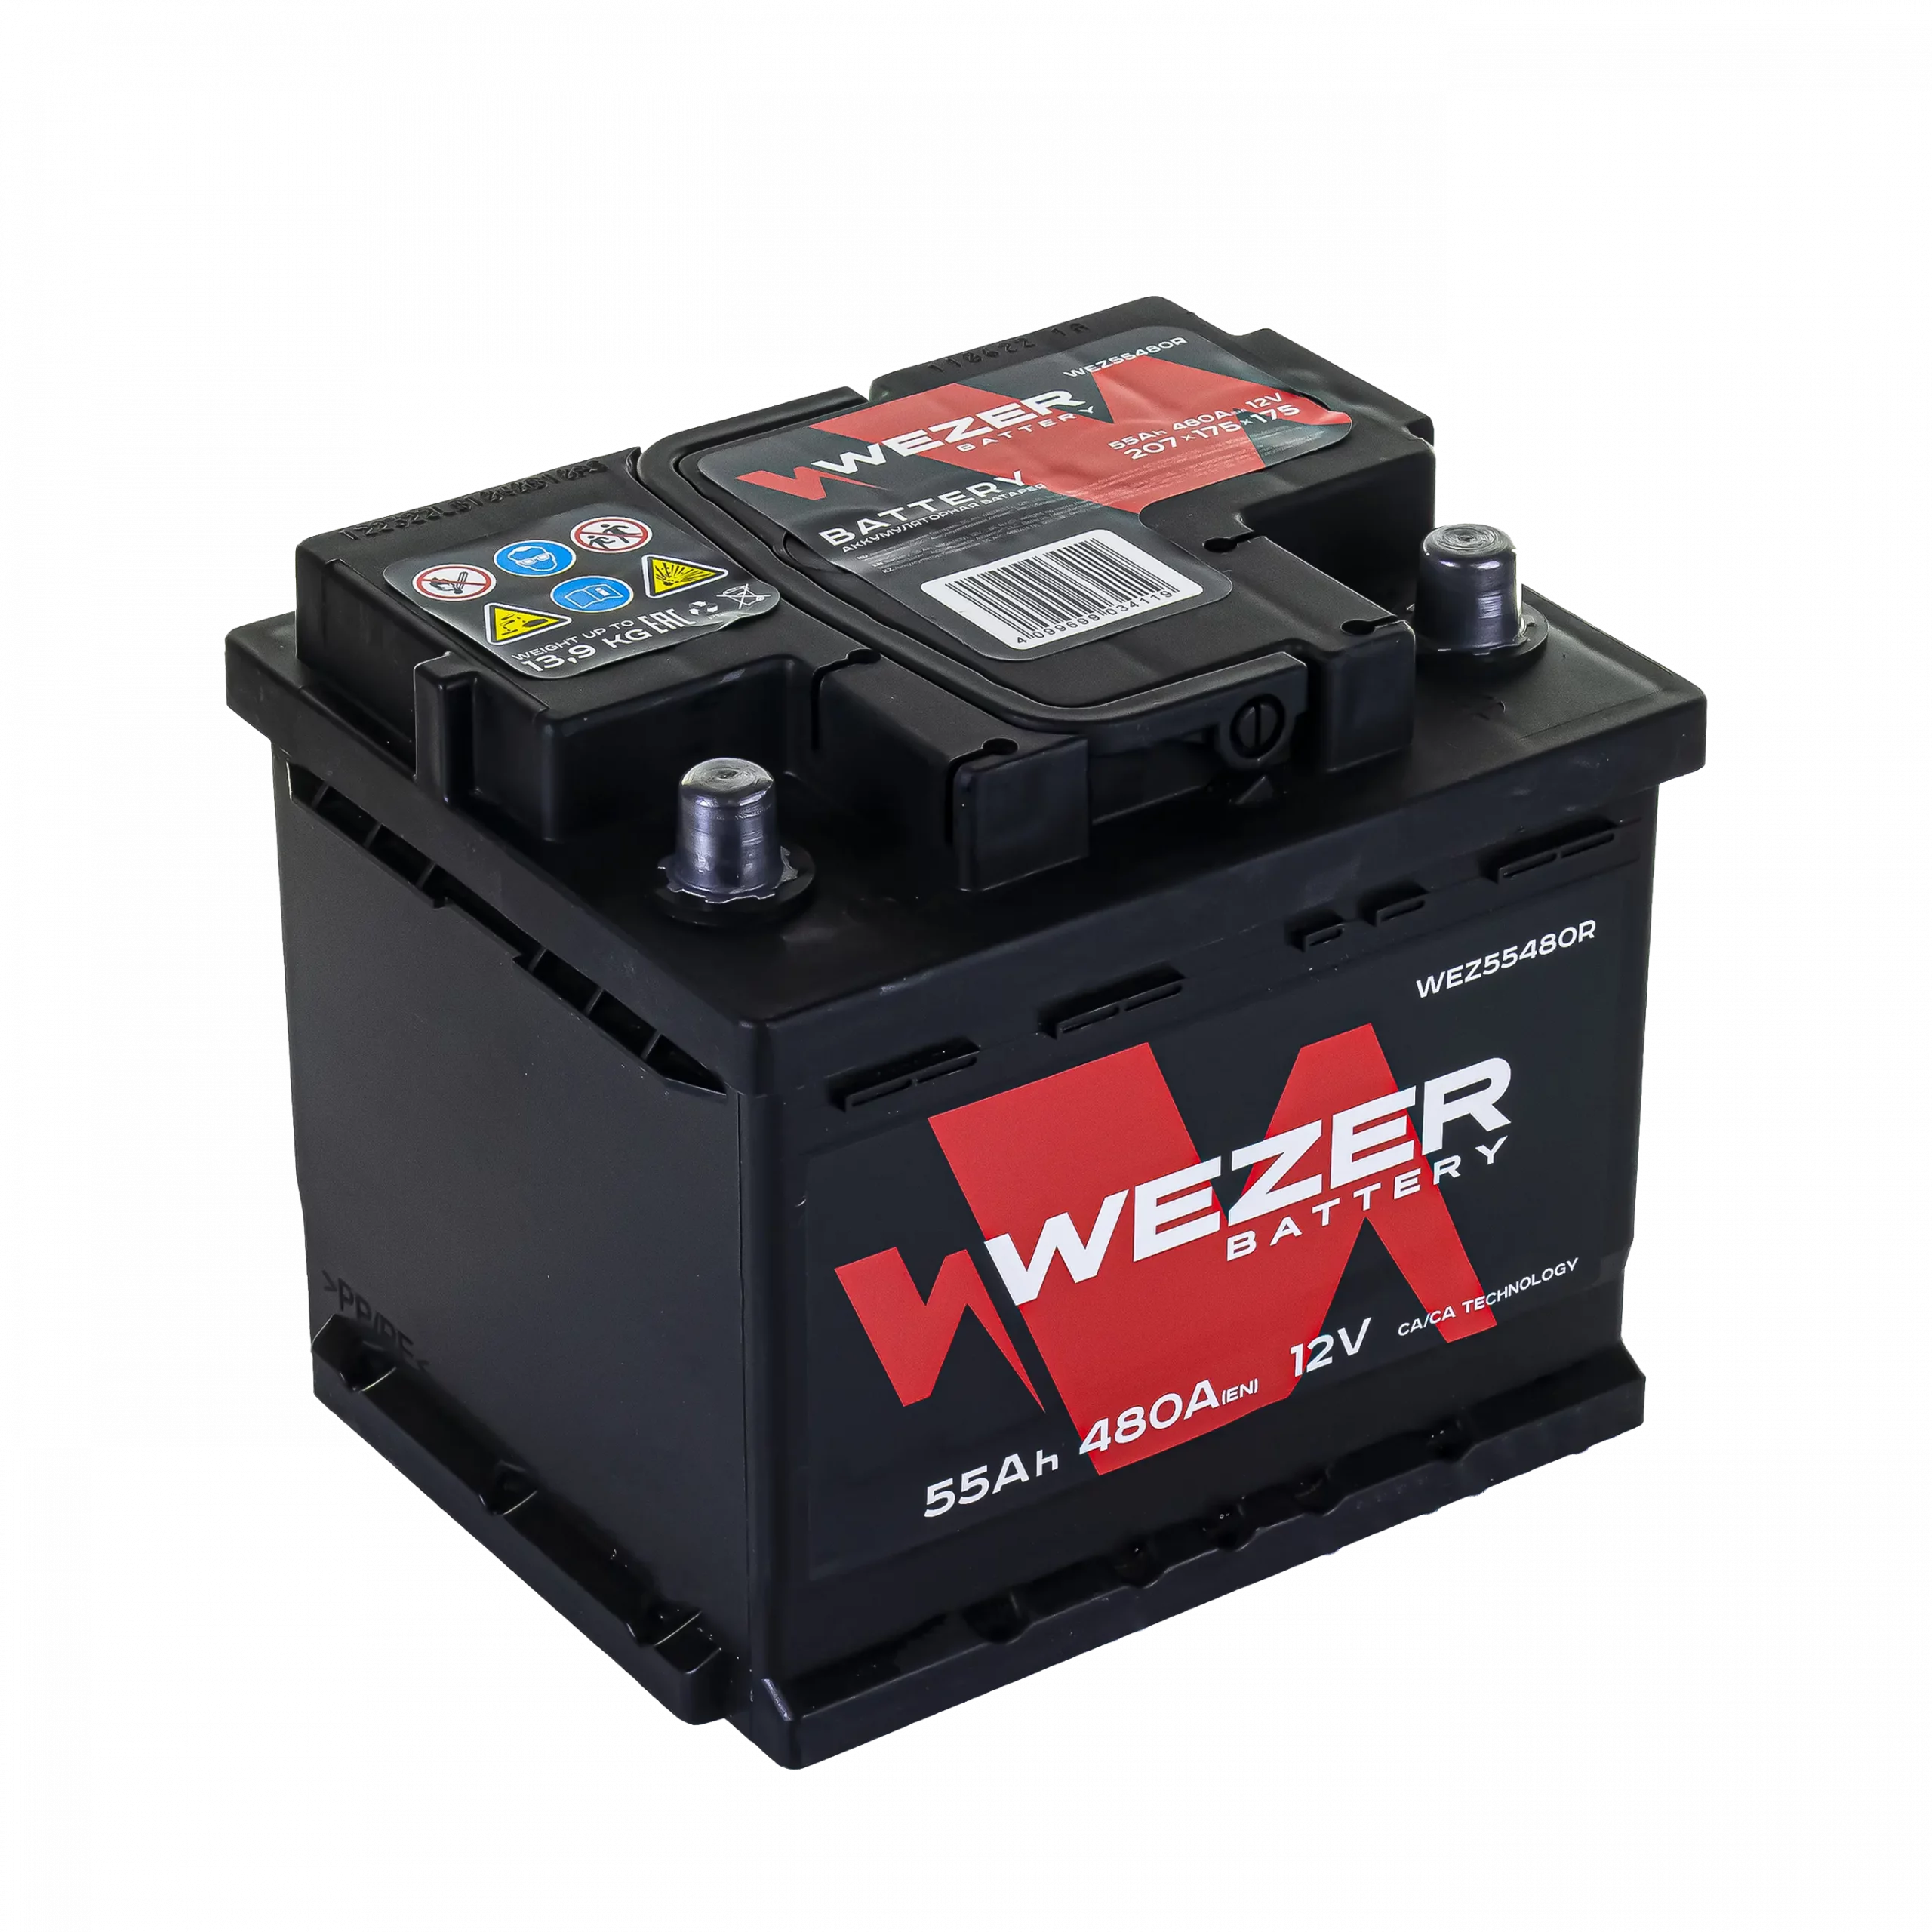 Аккумулятор WEZER 55Ah 480A (R)